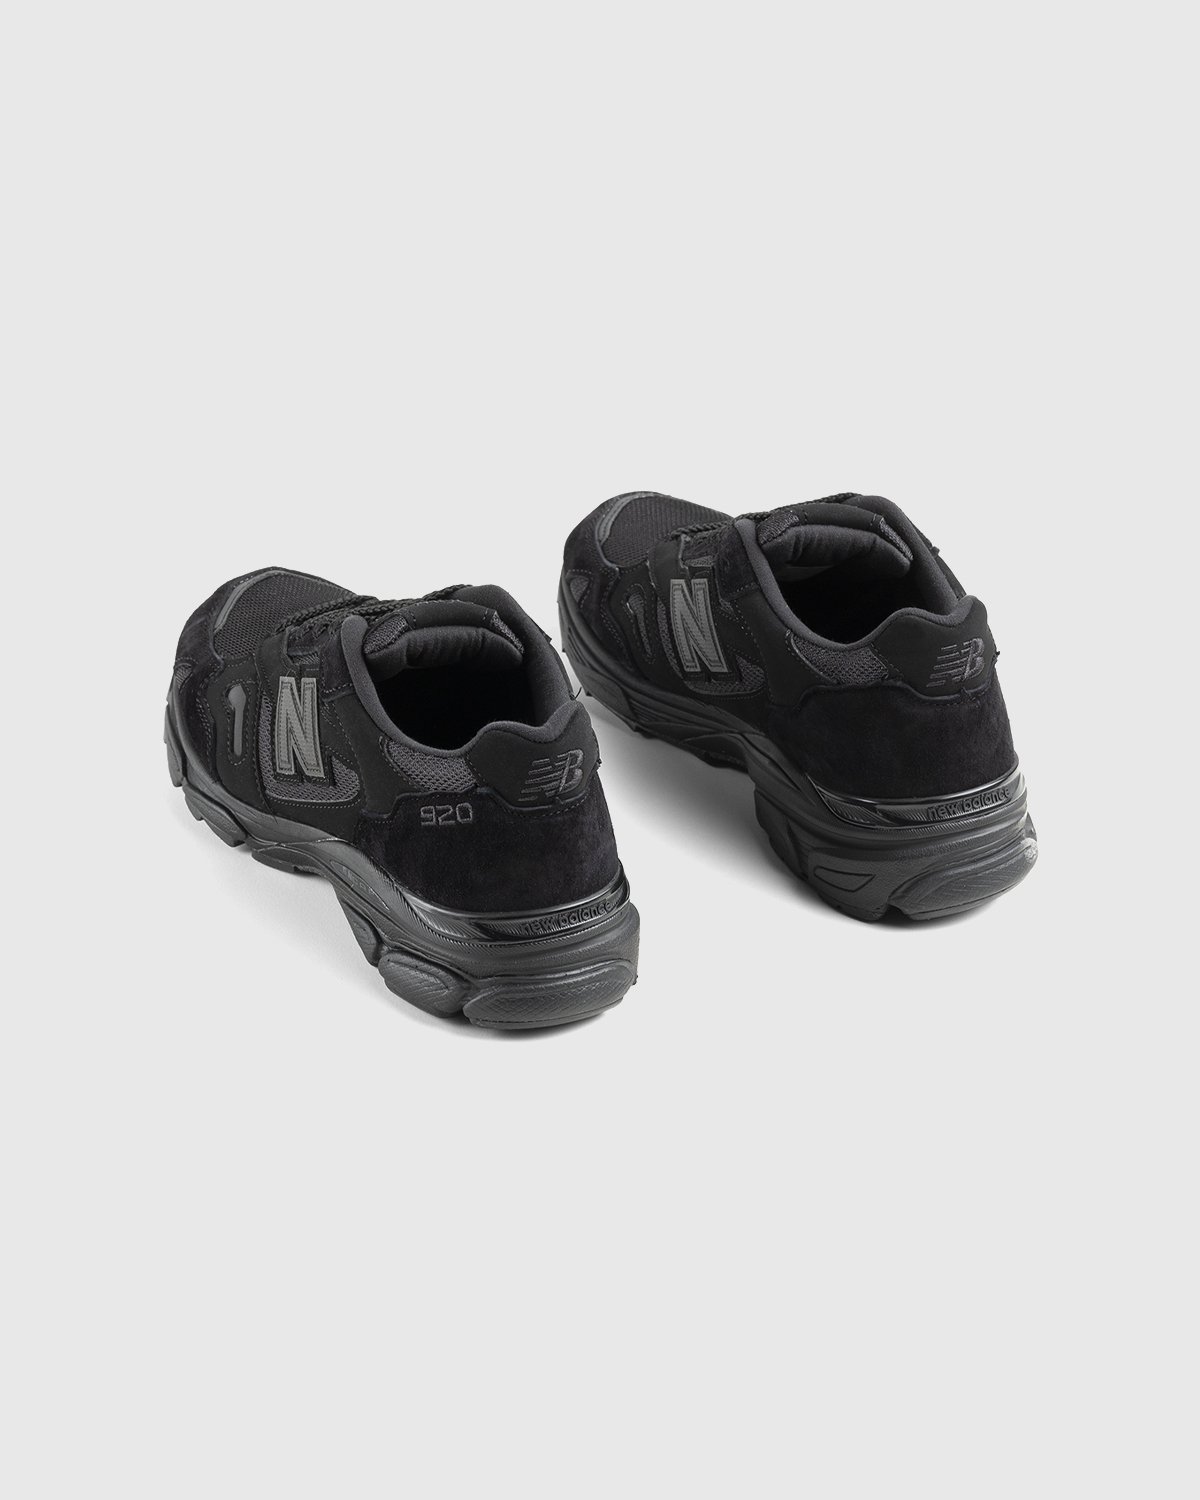 New Balance - M920 Black - Footwear - Black - Image 4